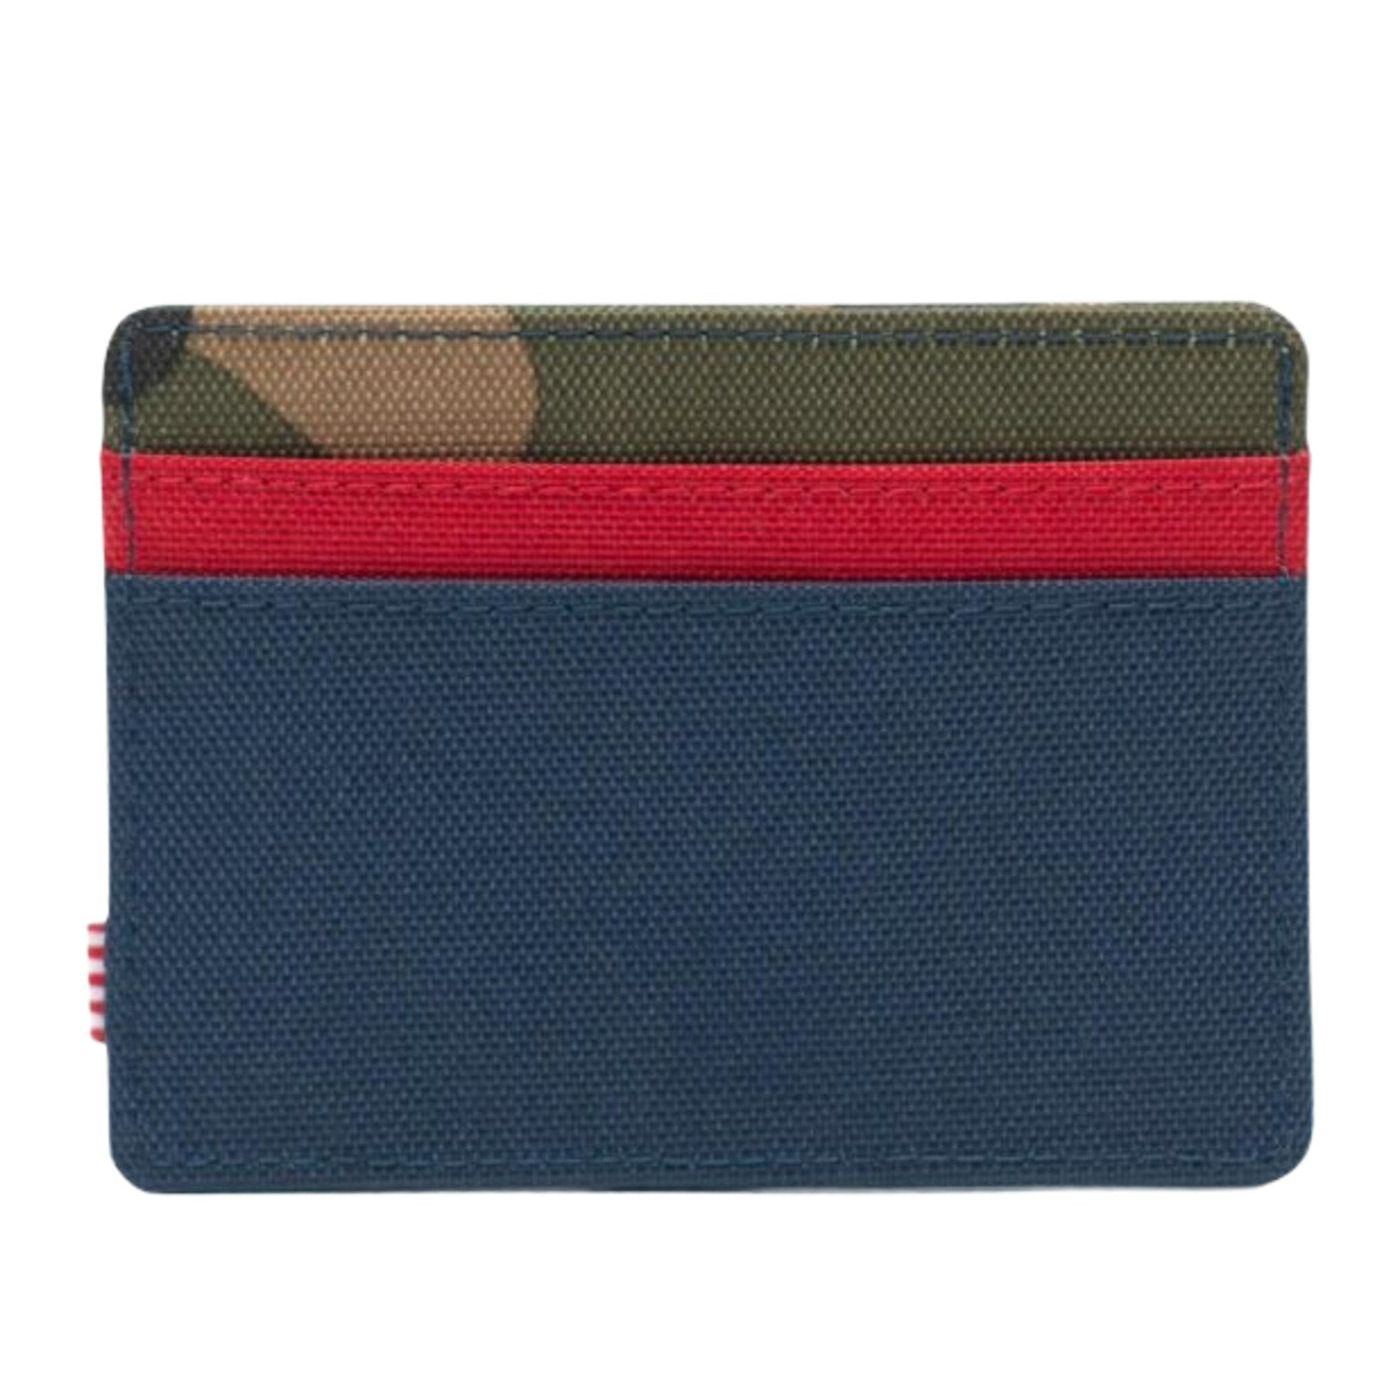 Herschel Charlie Card Holder Wallet Blue Red Camo